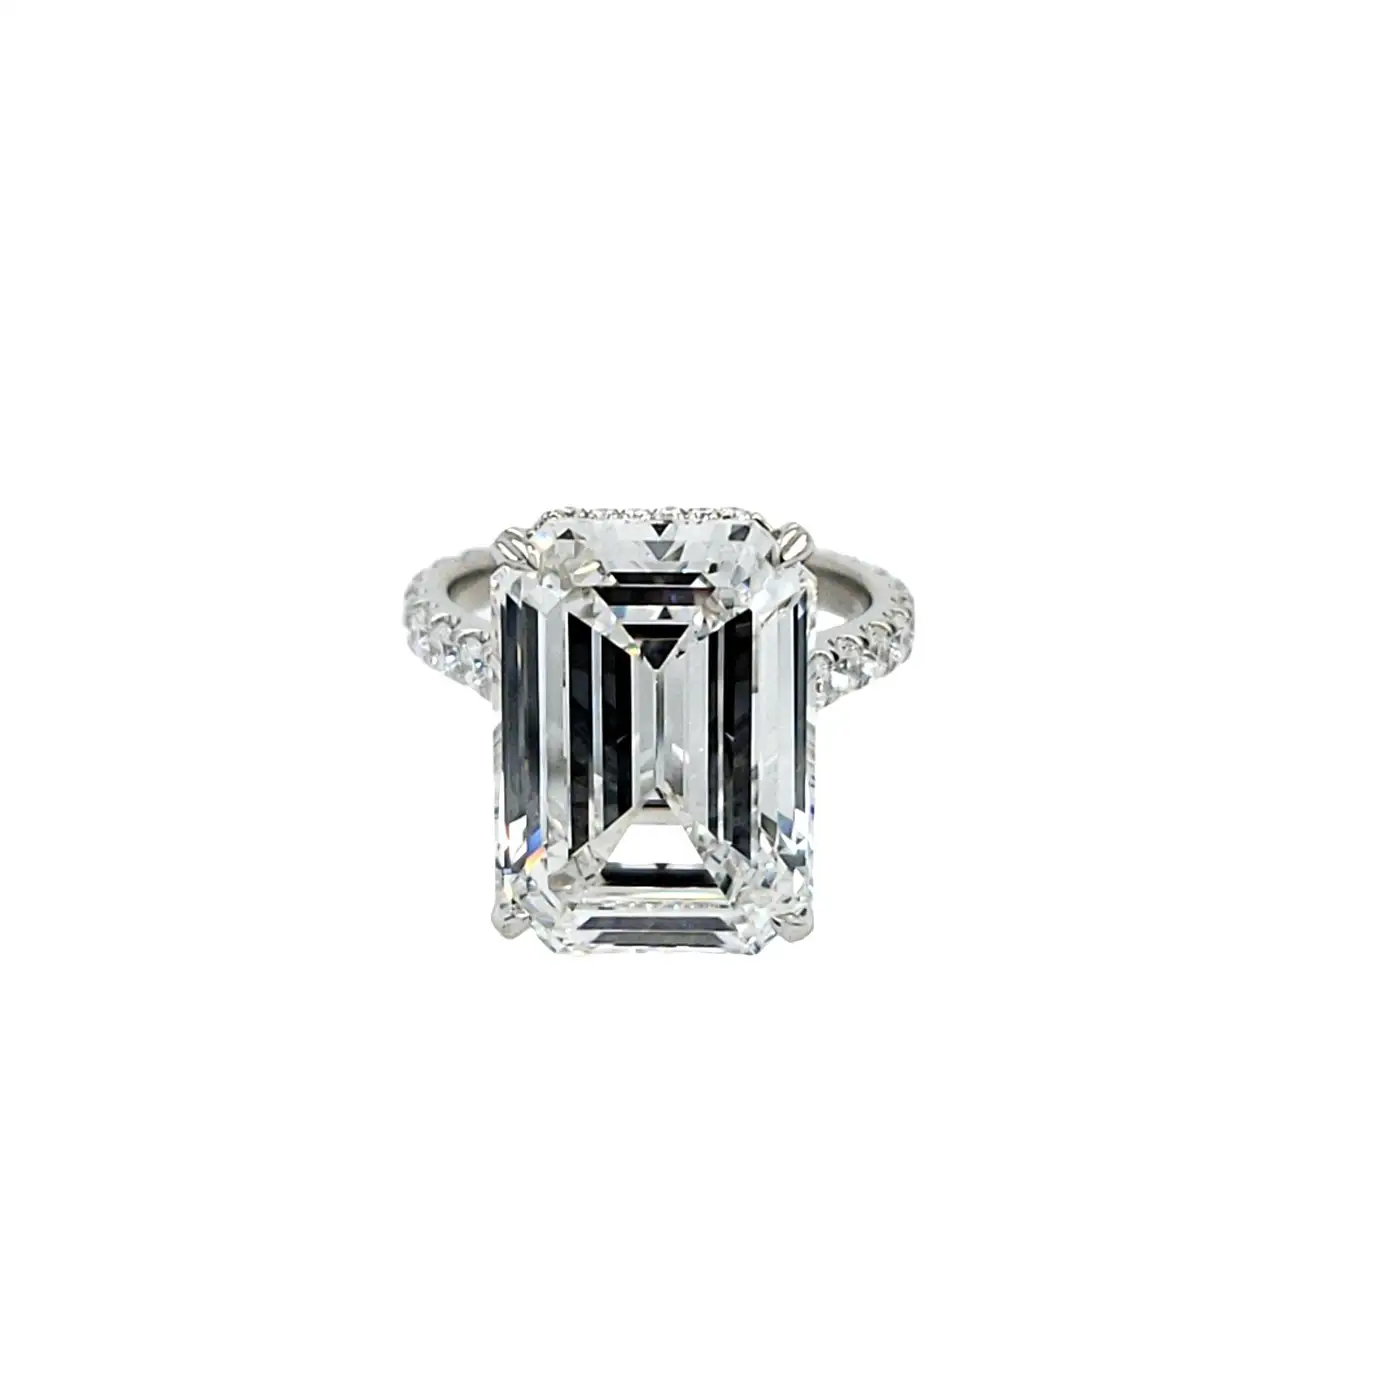 David-Rosenberg-10.41-Carat-Emerald-Cut-F-VVS2-GIA-Diamond-Engagement-Ring-3.webp